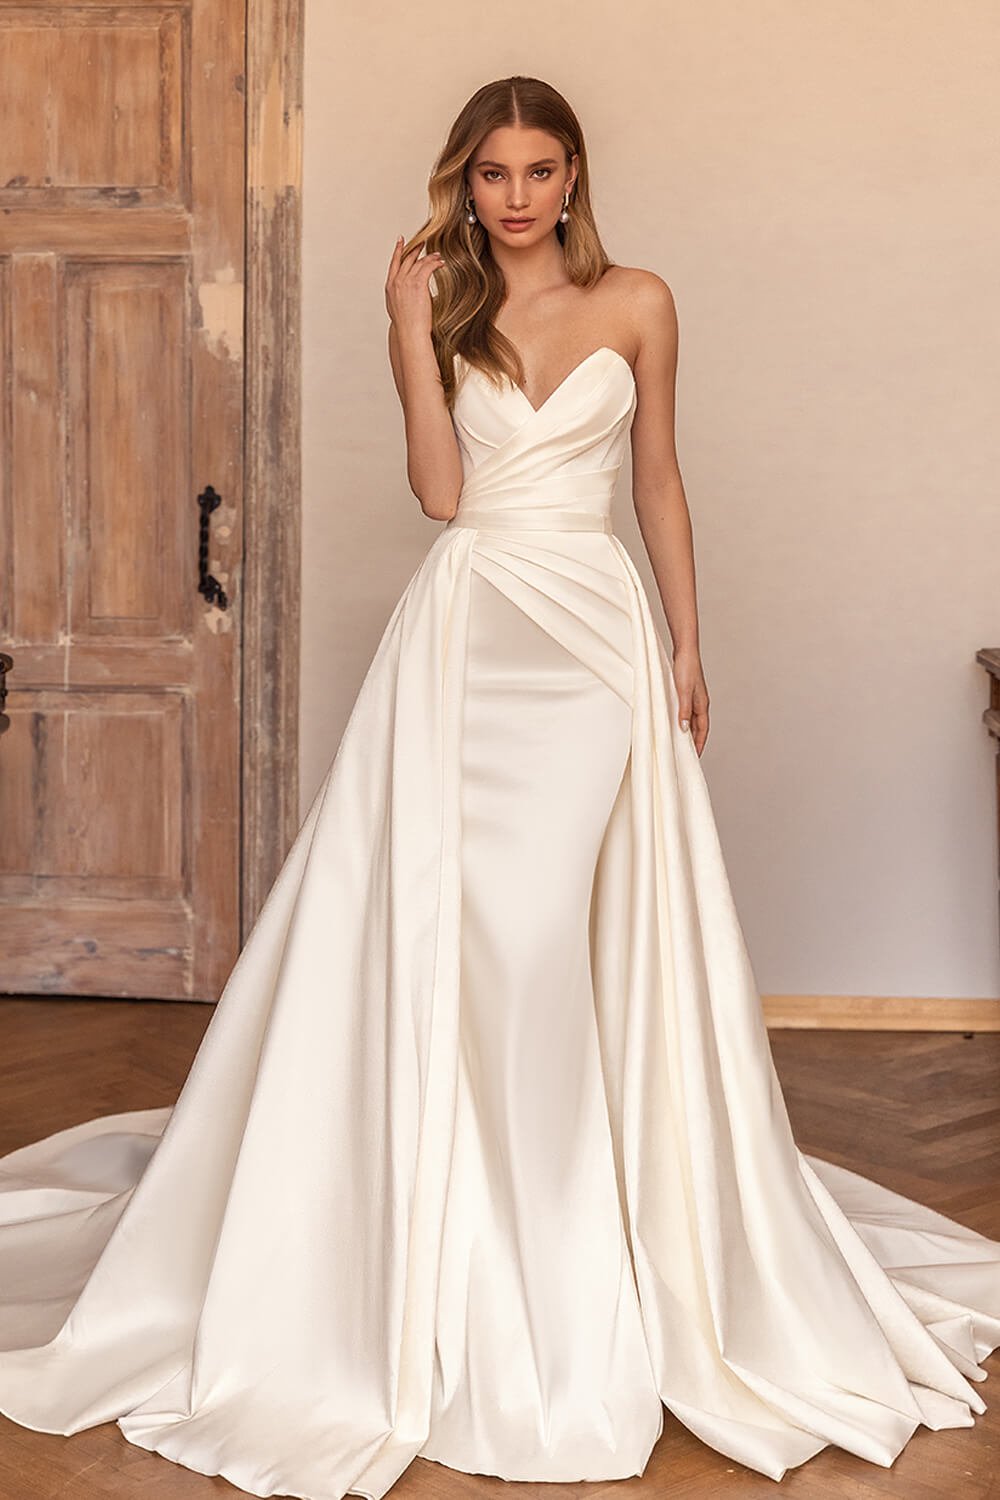 blanc-de-blanc-bridal-boutique-pittsburgh-cleveland-dress-wedding-gown-EVA-LENDEL-likagown.jpeg